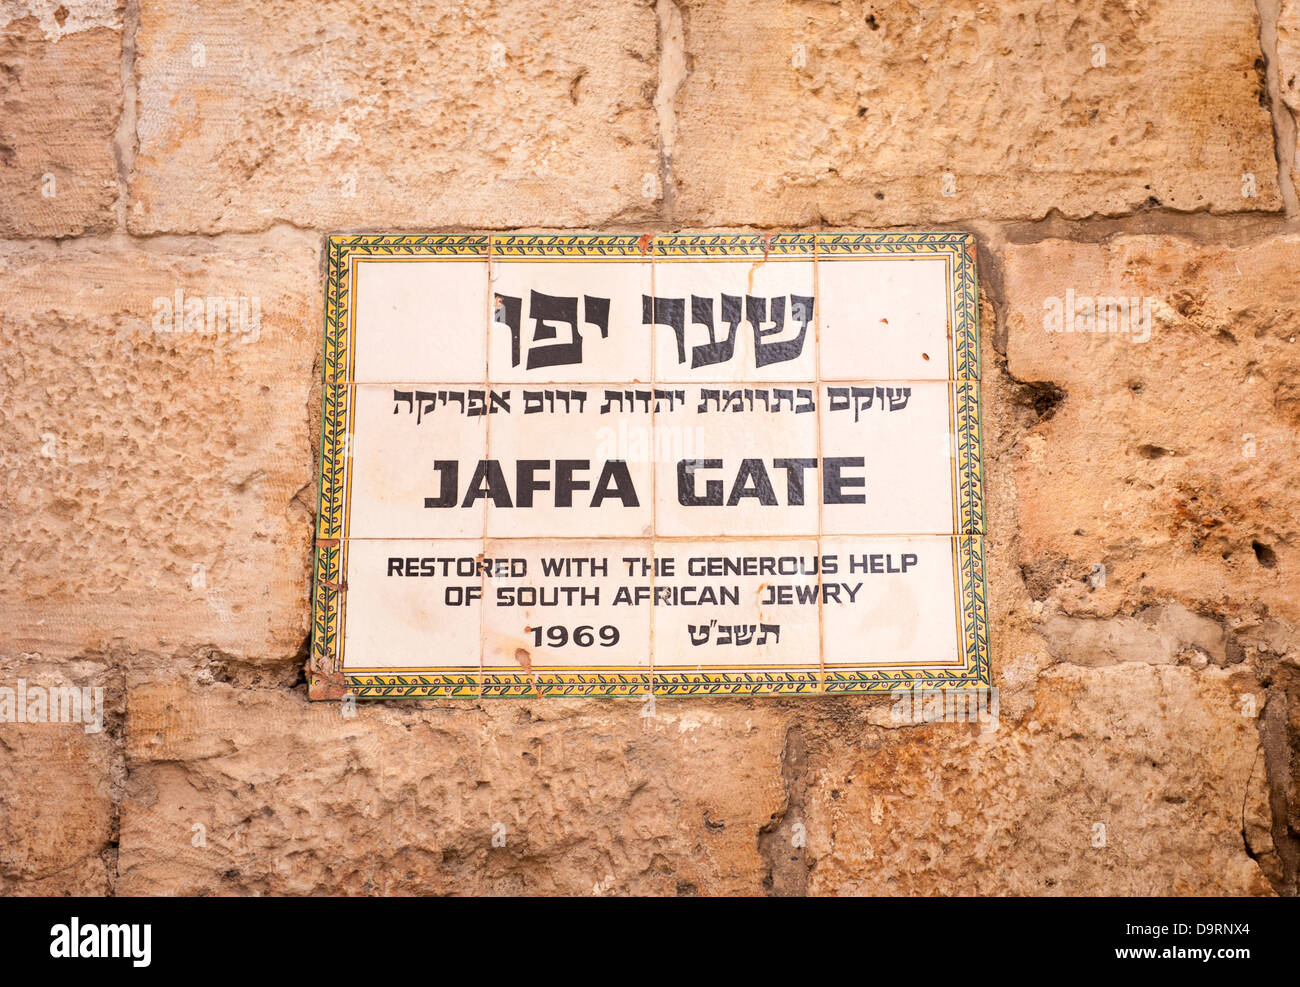 Israel Jerusalem Old City street sign scene tiled English Hebrew Ivrit script Jaffa Gate restored 1969 aid donations South African Jewry Jews Stock Photo